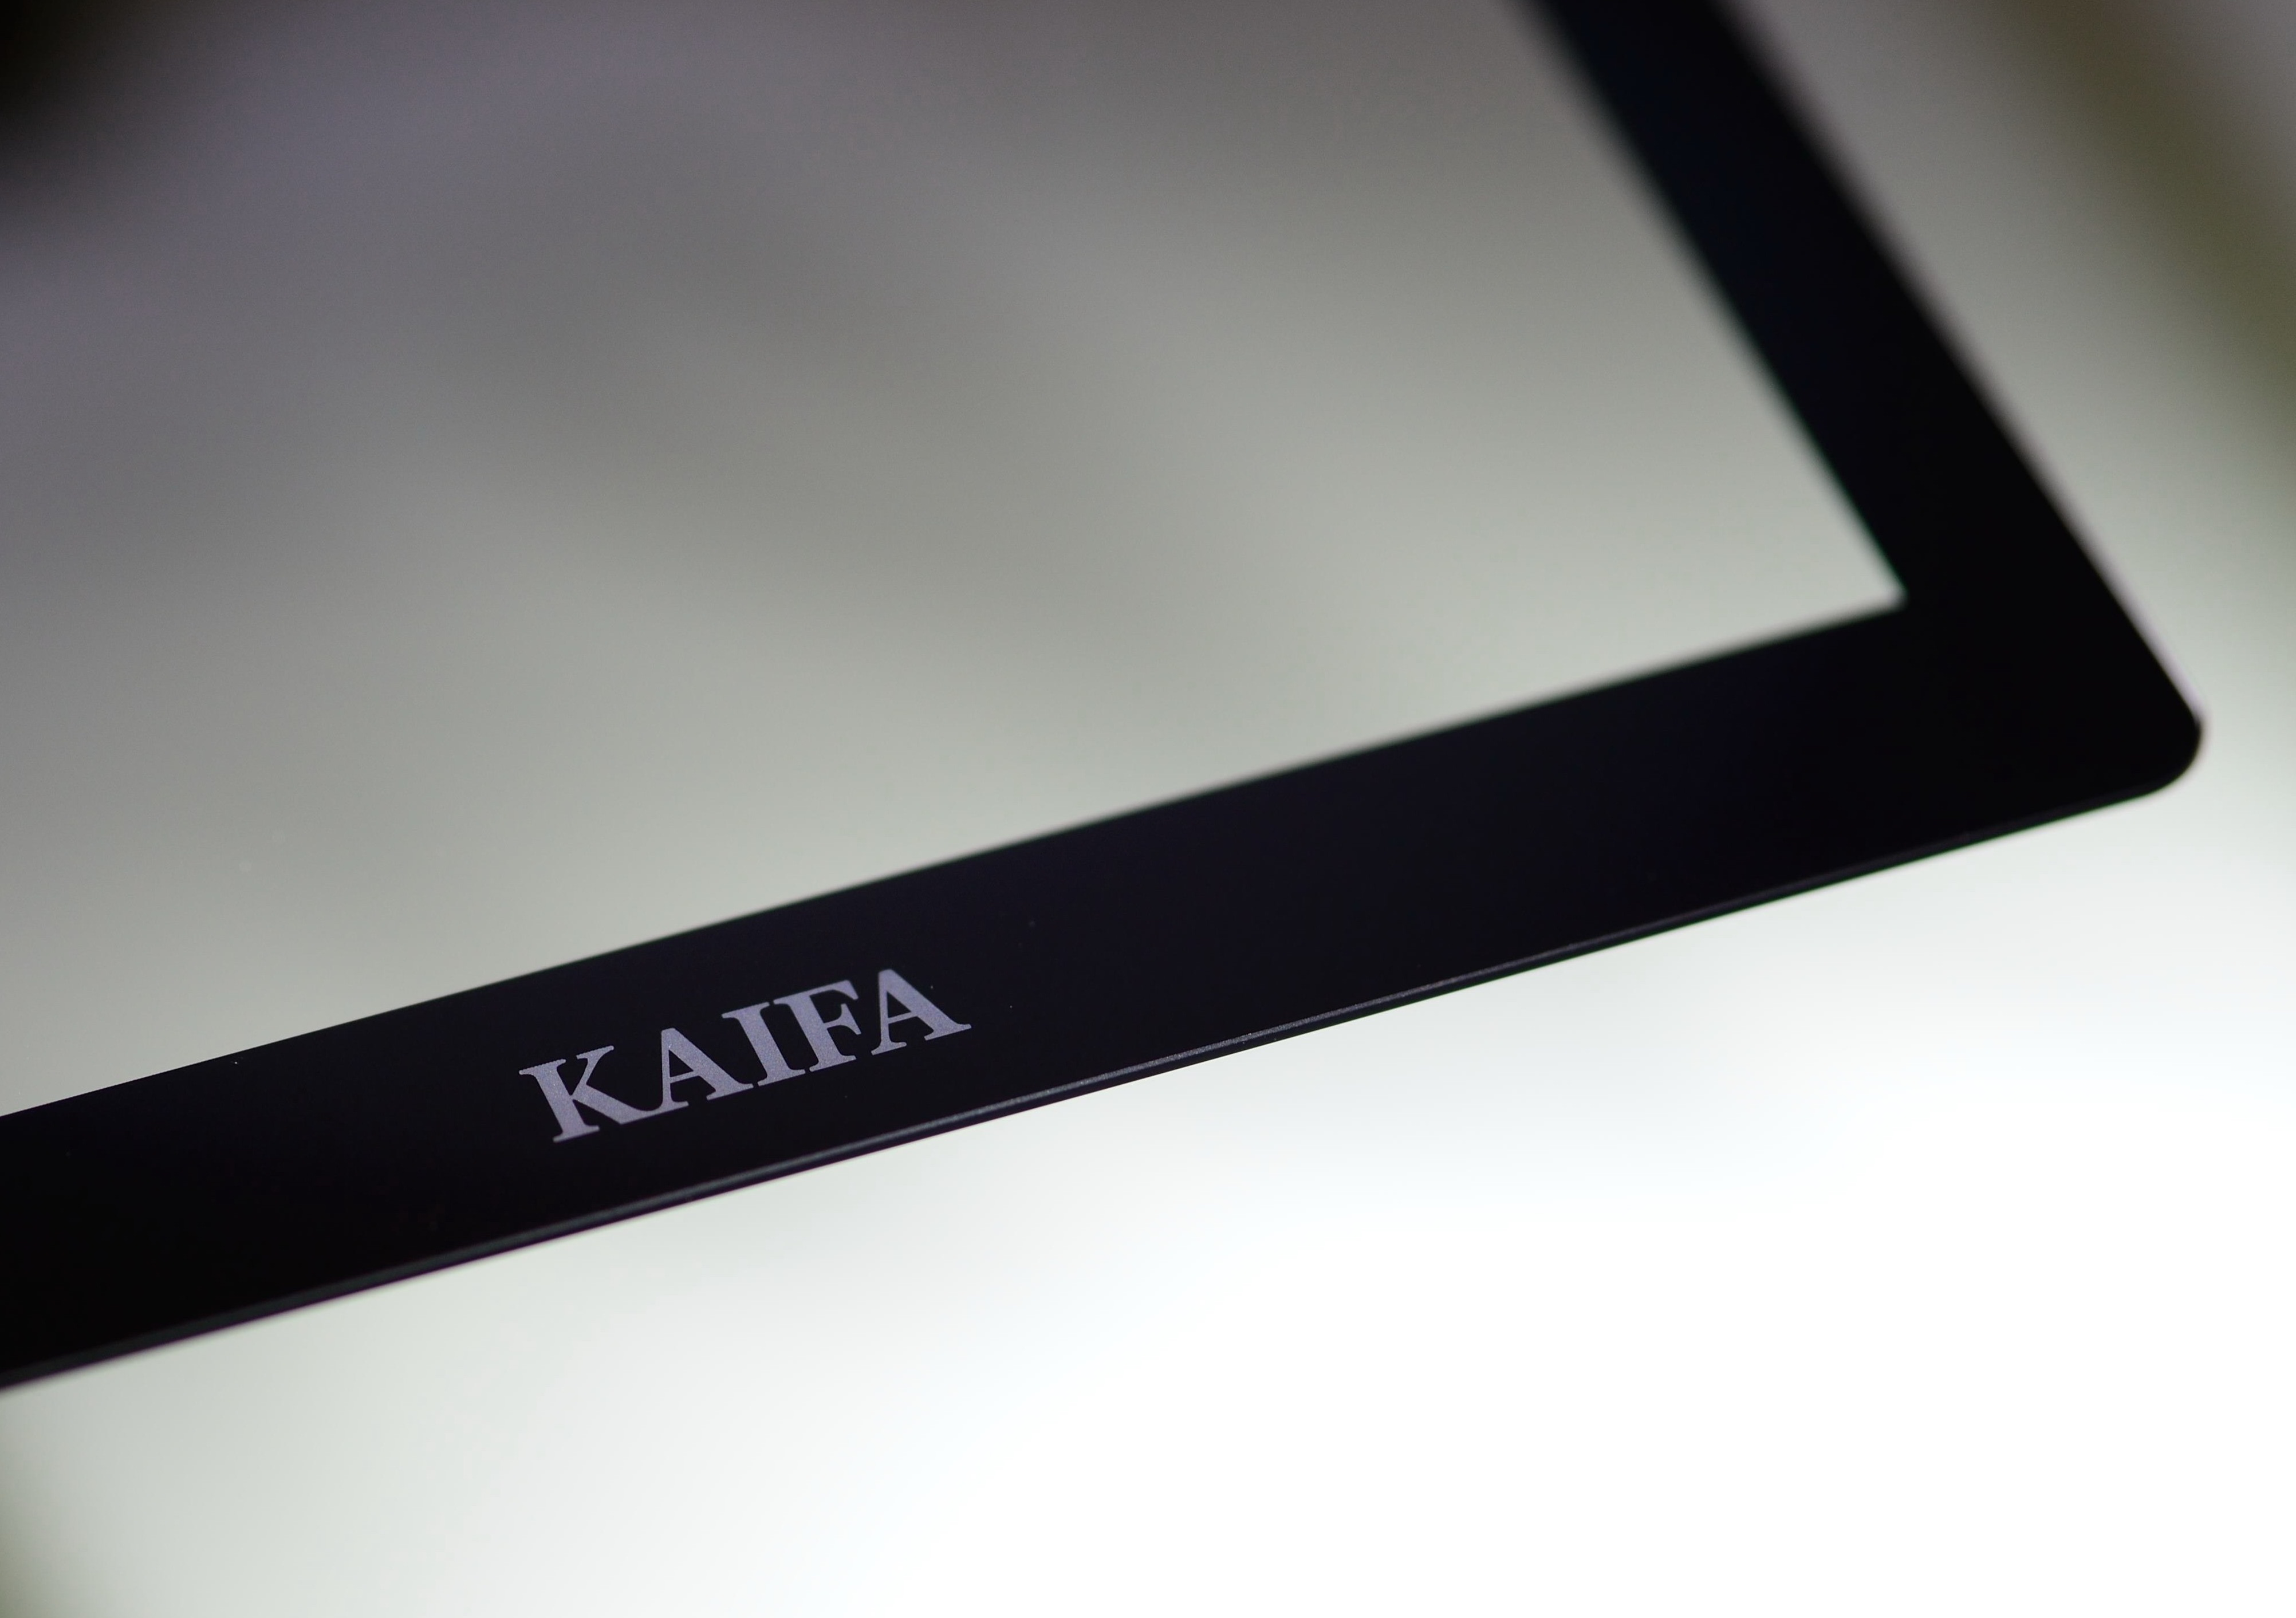 Kaifa Technology Japan Ltd.